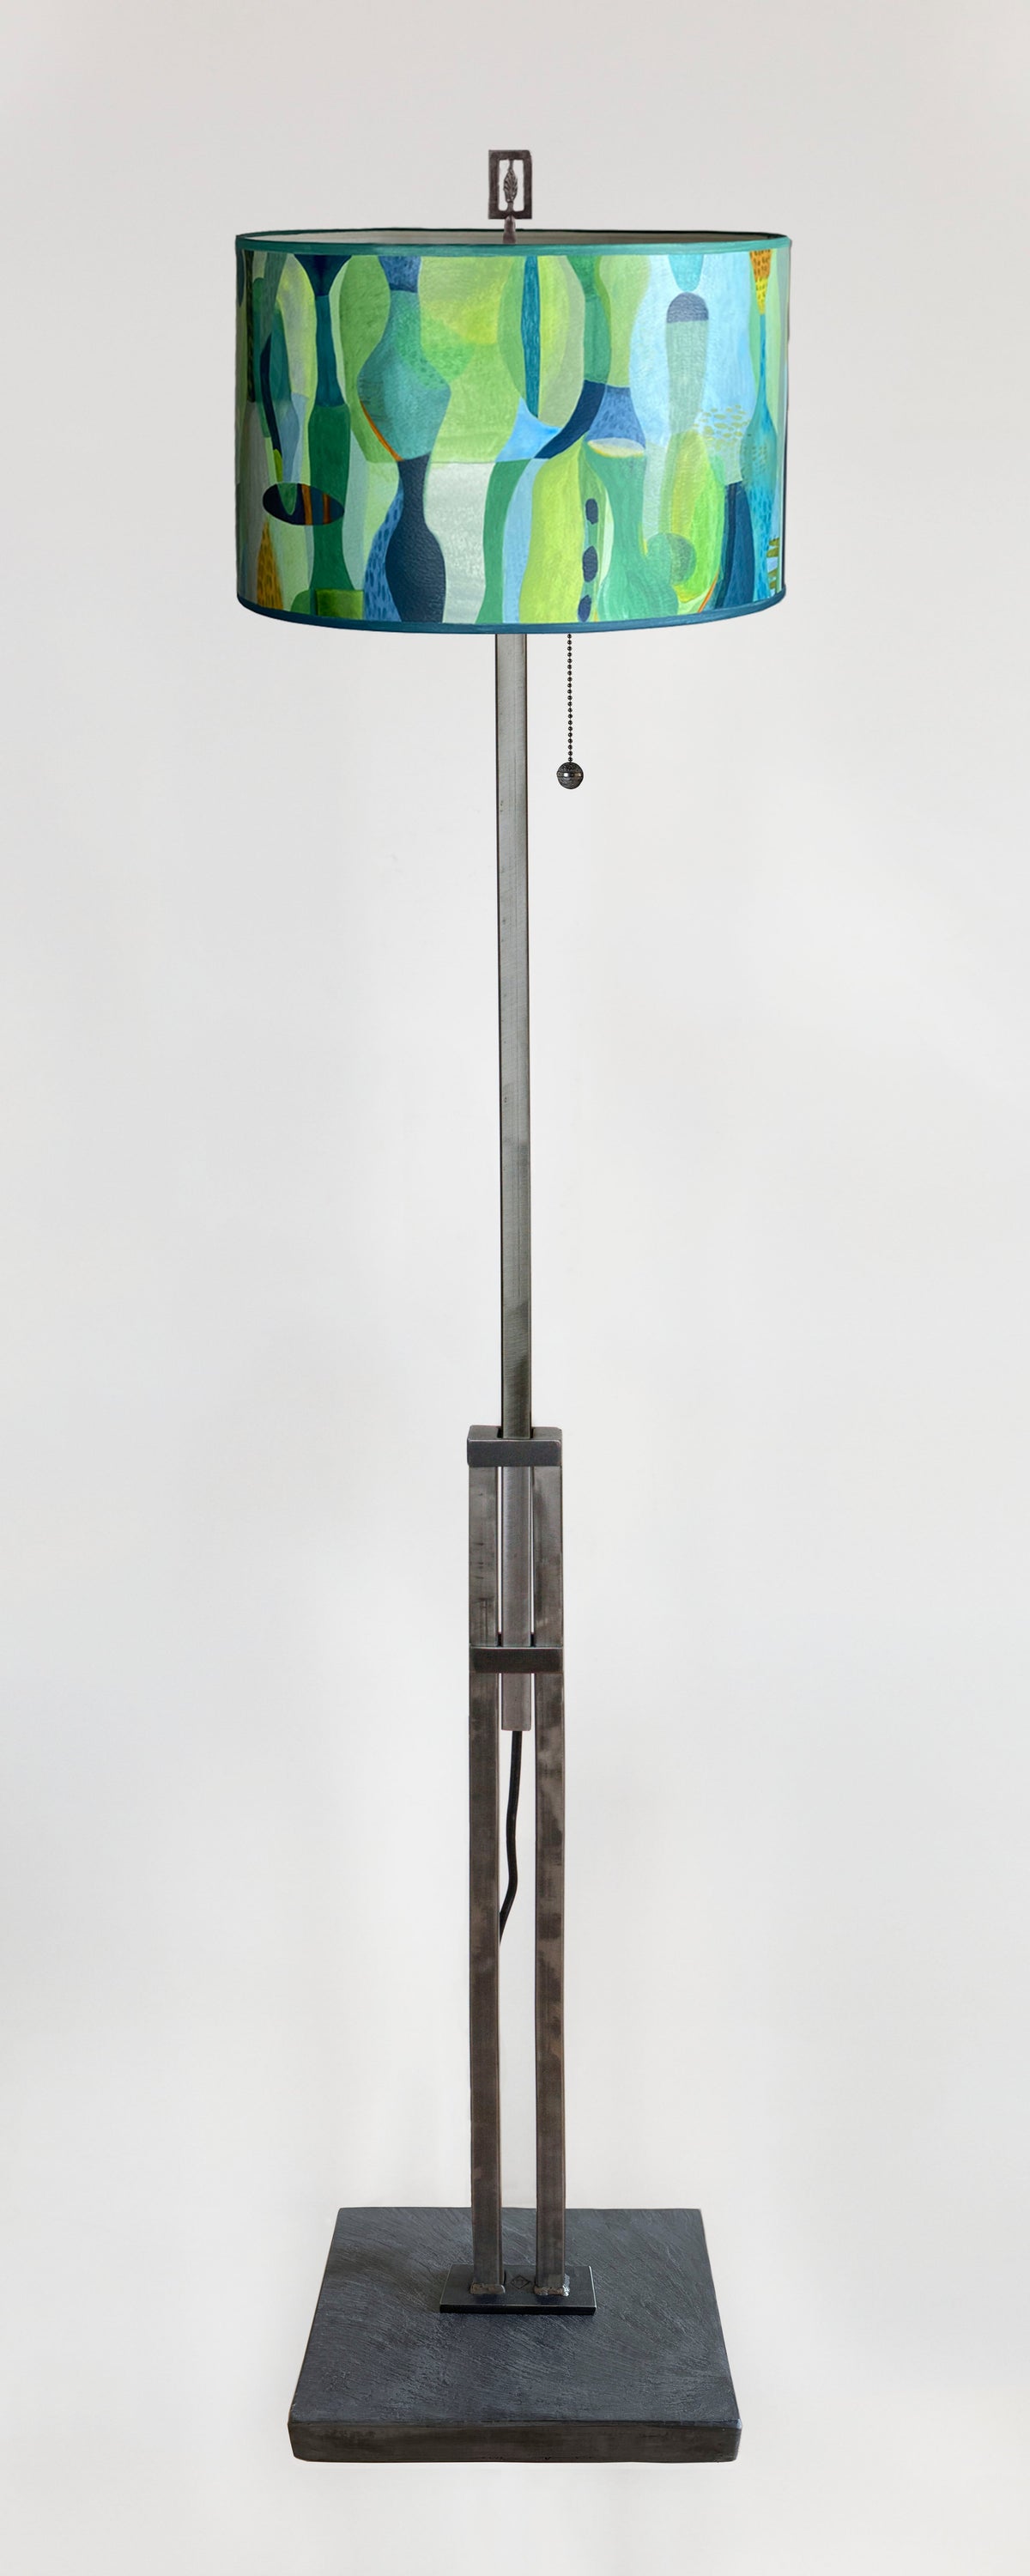 Janna Ugone &amp; Co Floor Lamp Adjustable-Height Steel Floor Lamp with Large Drum Shade in Riviera in Citrus